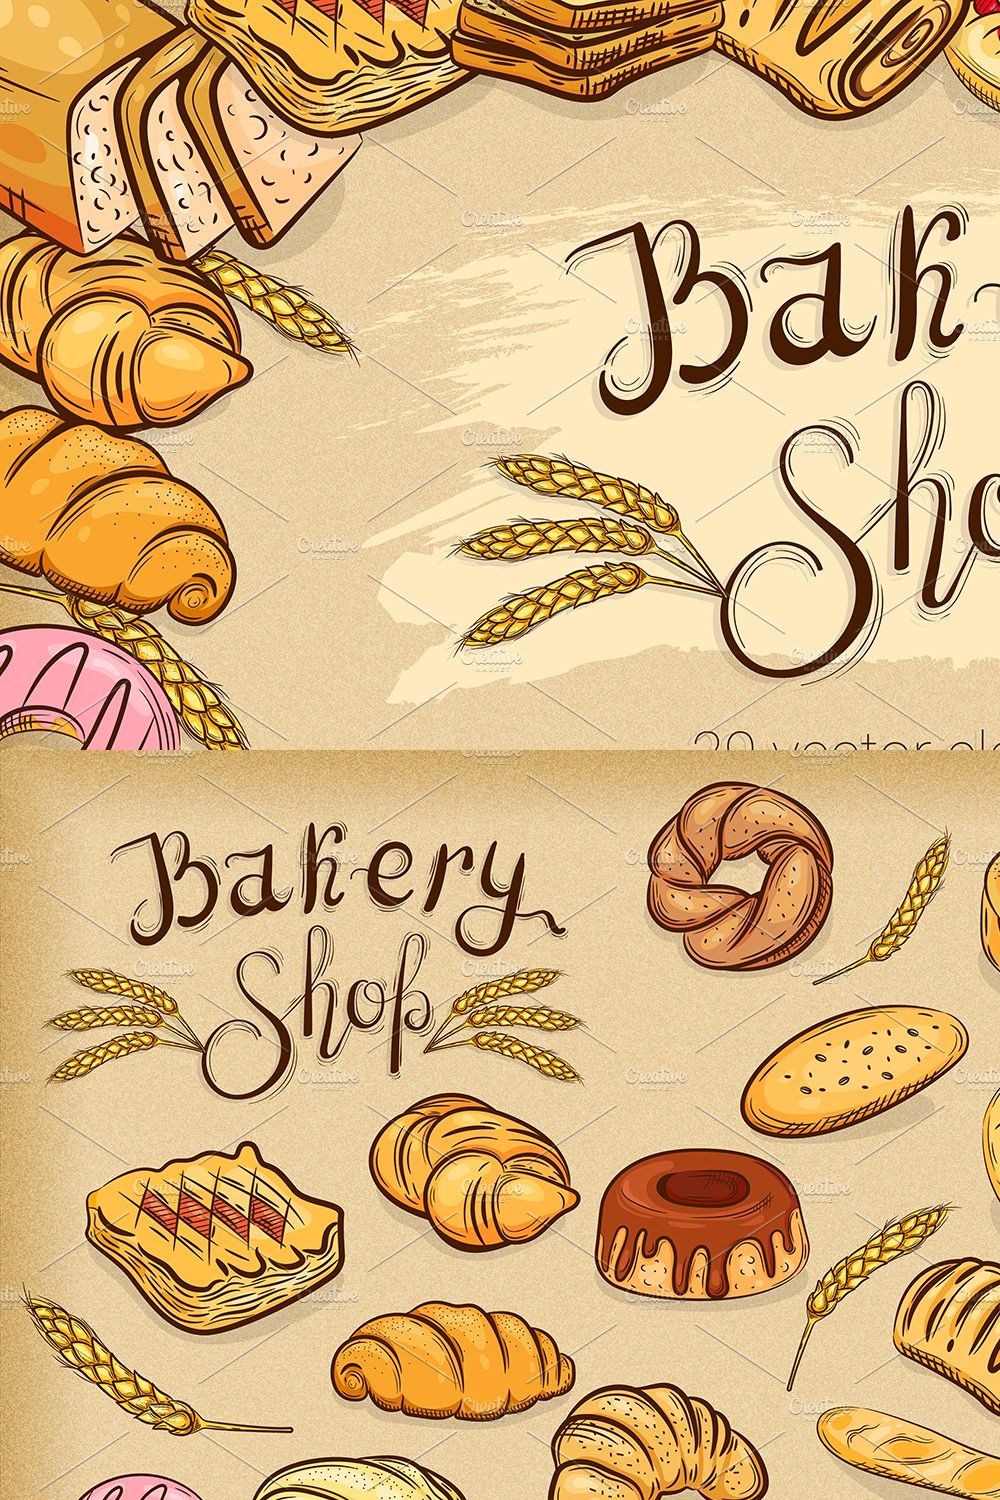 Bakery Shop pinterest preview image.